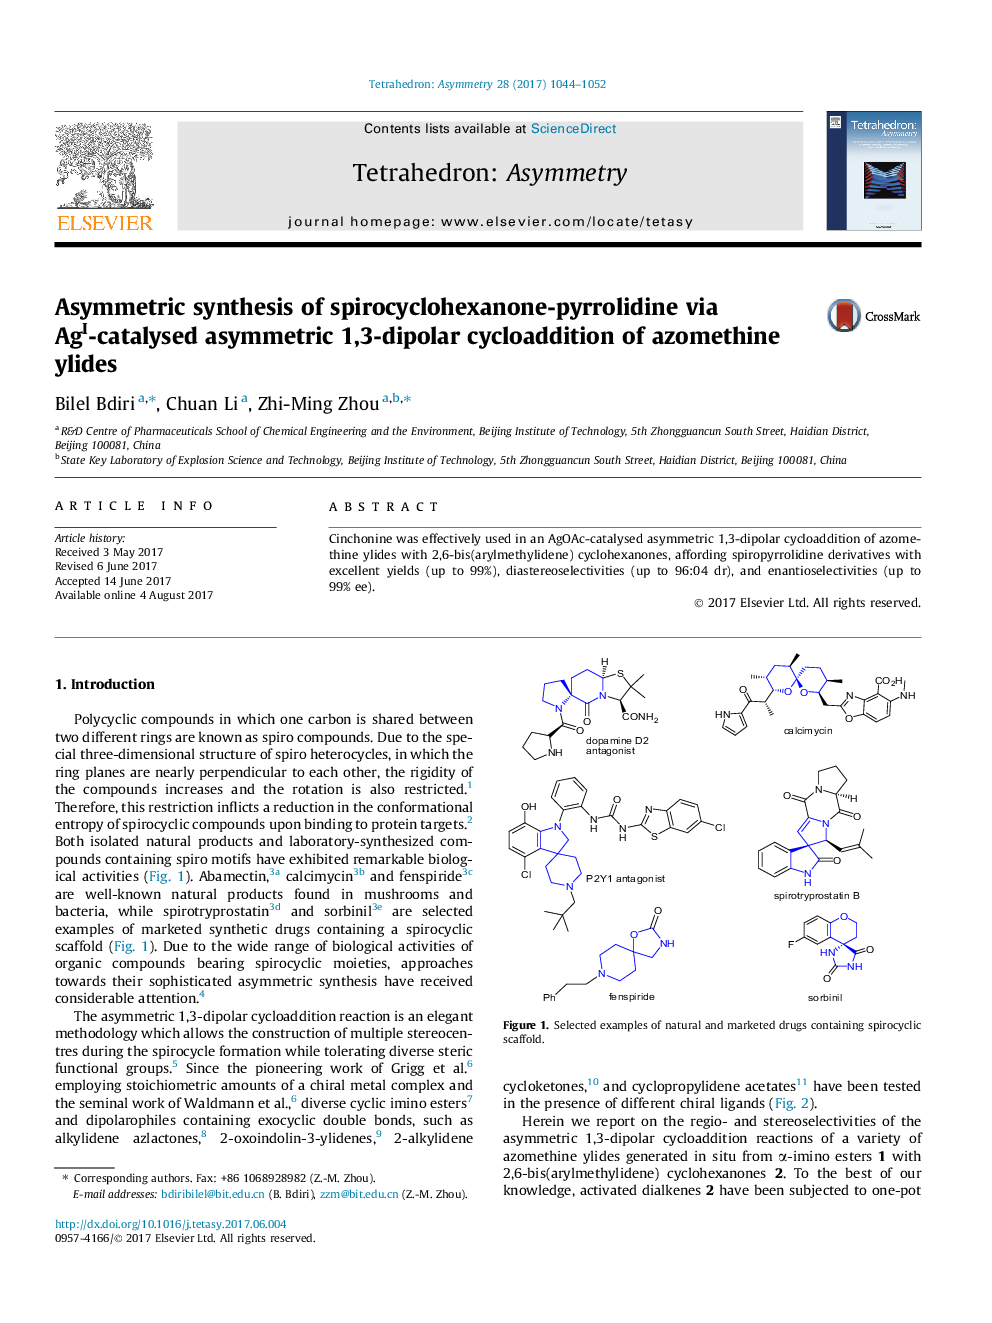 Asymmetric synthesis of spirocyclohexanone-pyrrolidine via AgI-catalysed asymmetric 1,3-dipolar cycloaddition of azomethine ylides